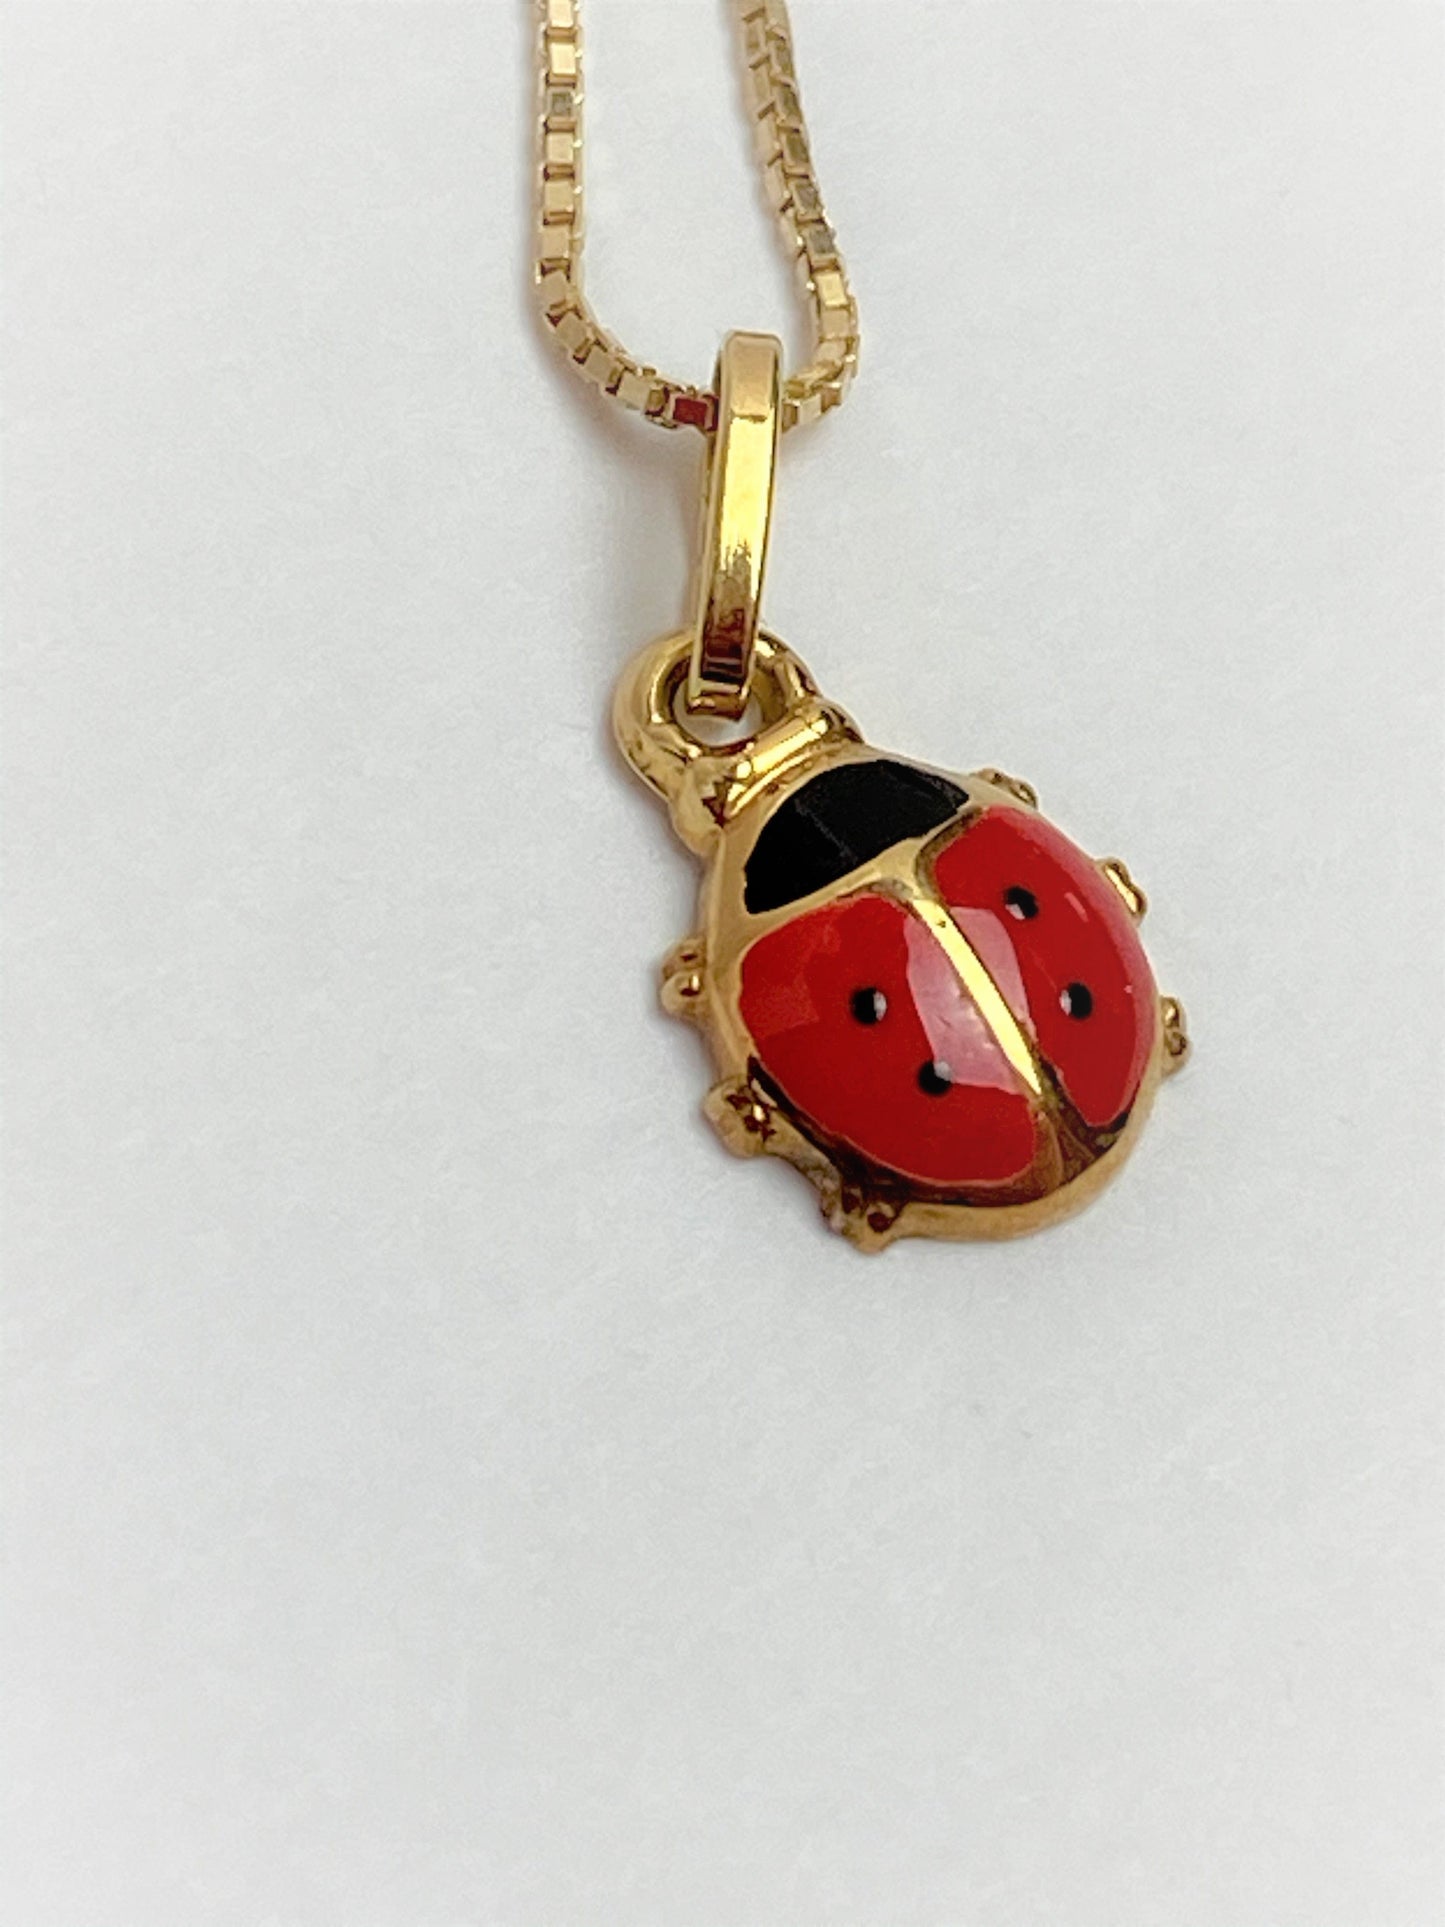 14k Gold Jewelry Designer 14KT & Guilloche Enamel Ladybug Necklace & Earrings Demi Parure Set